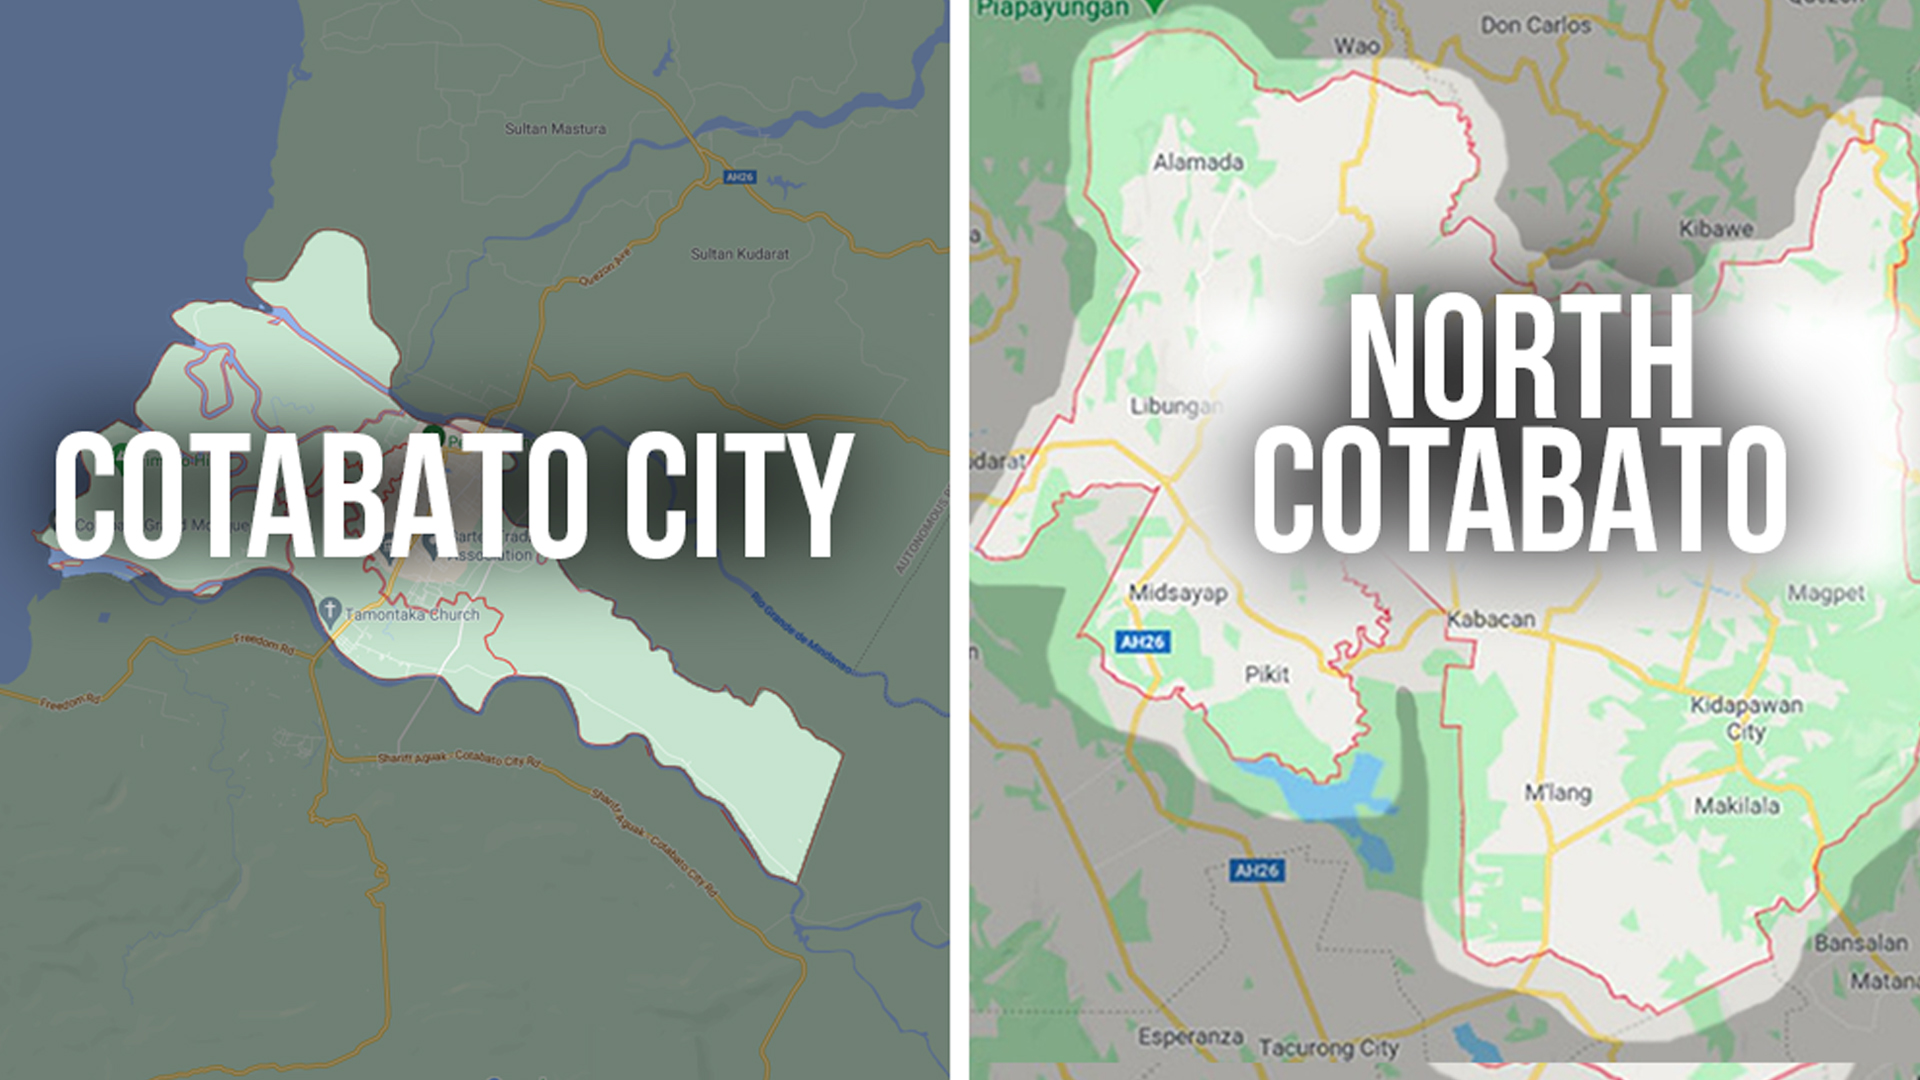 BARMM legislators push for the establishment of district engineering offices in Cotabato City, North Cotabato